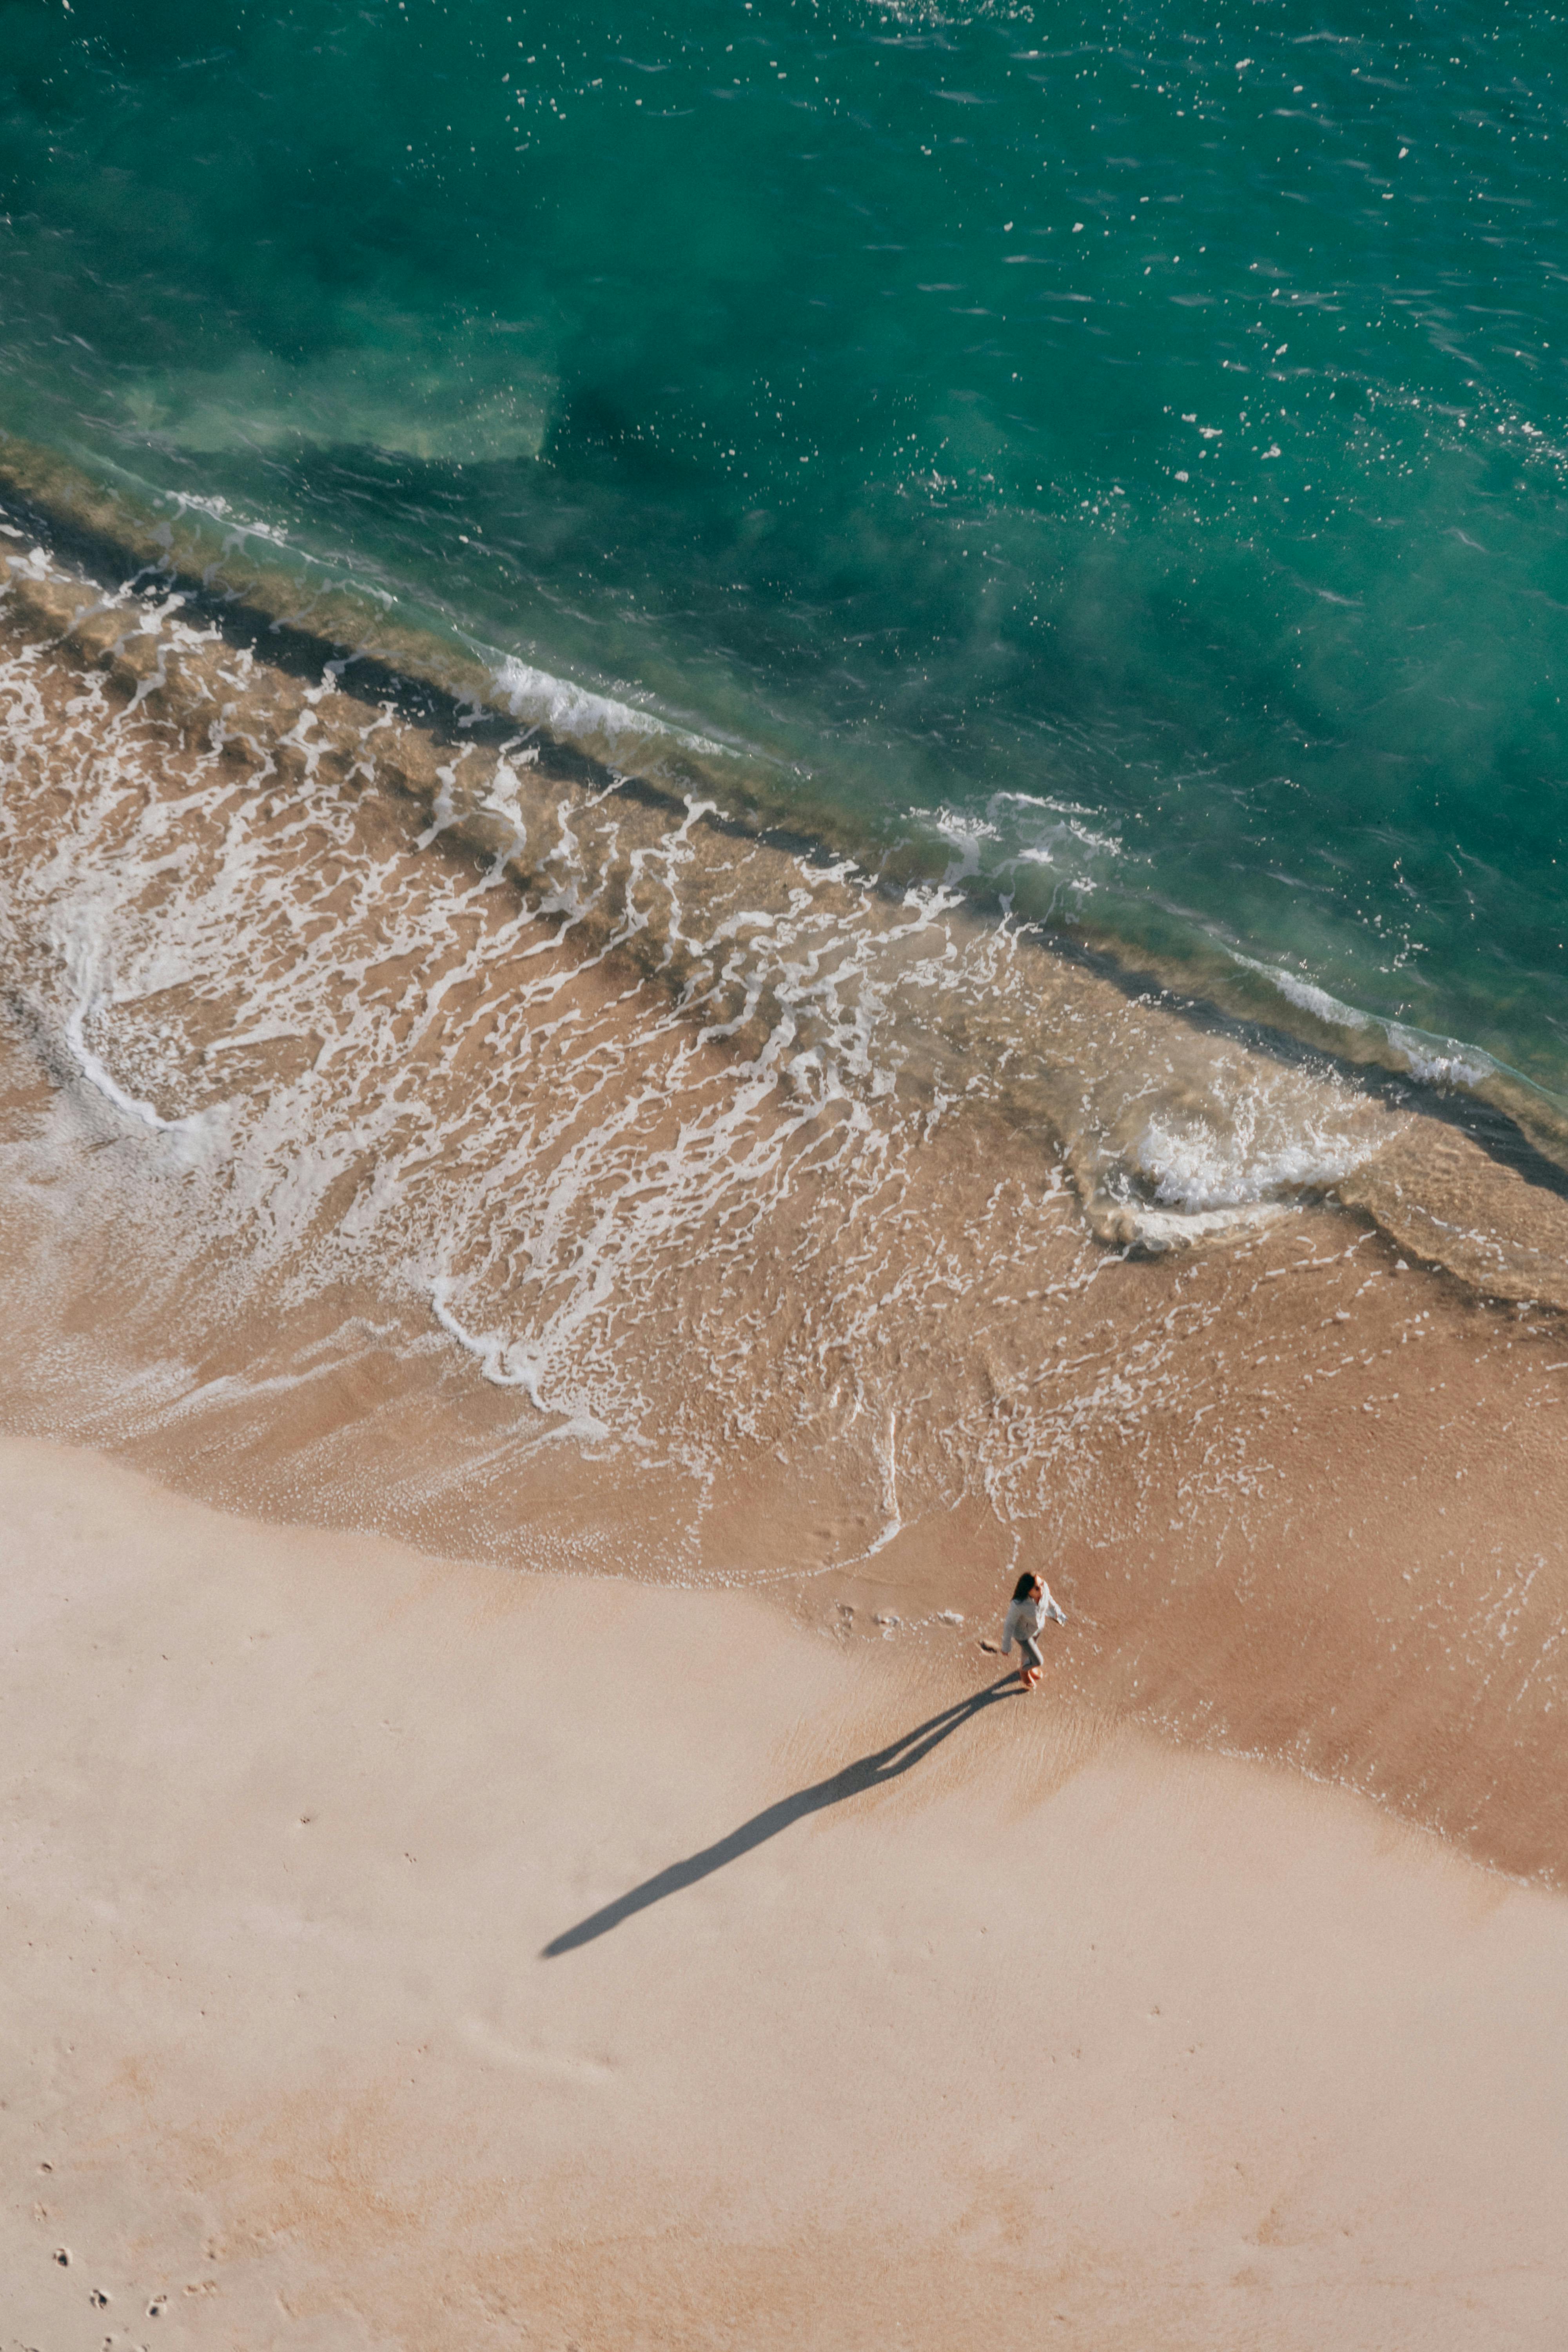 A woman walking on a beach | Source: Pexels